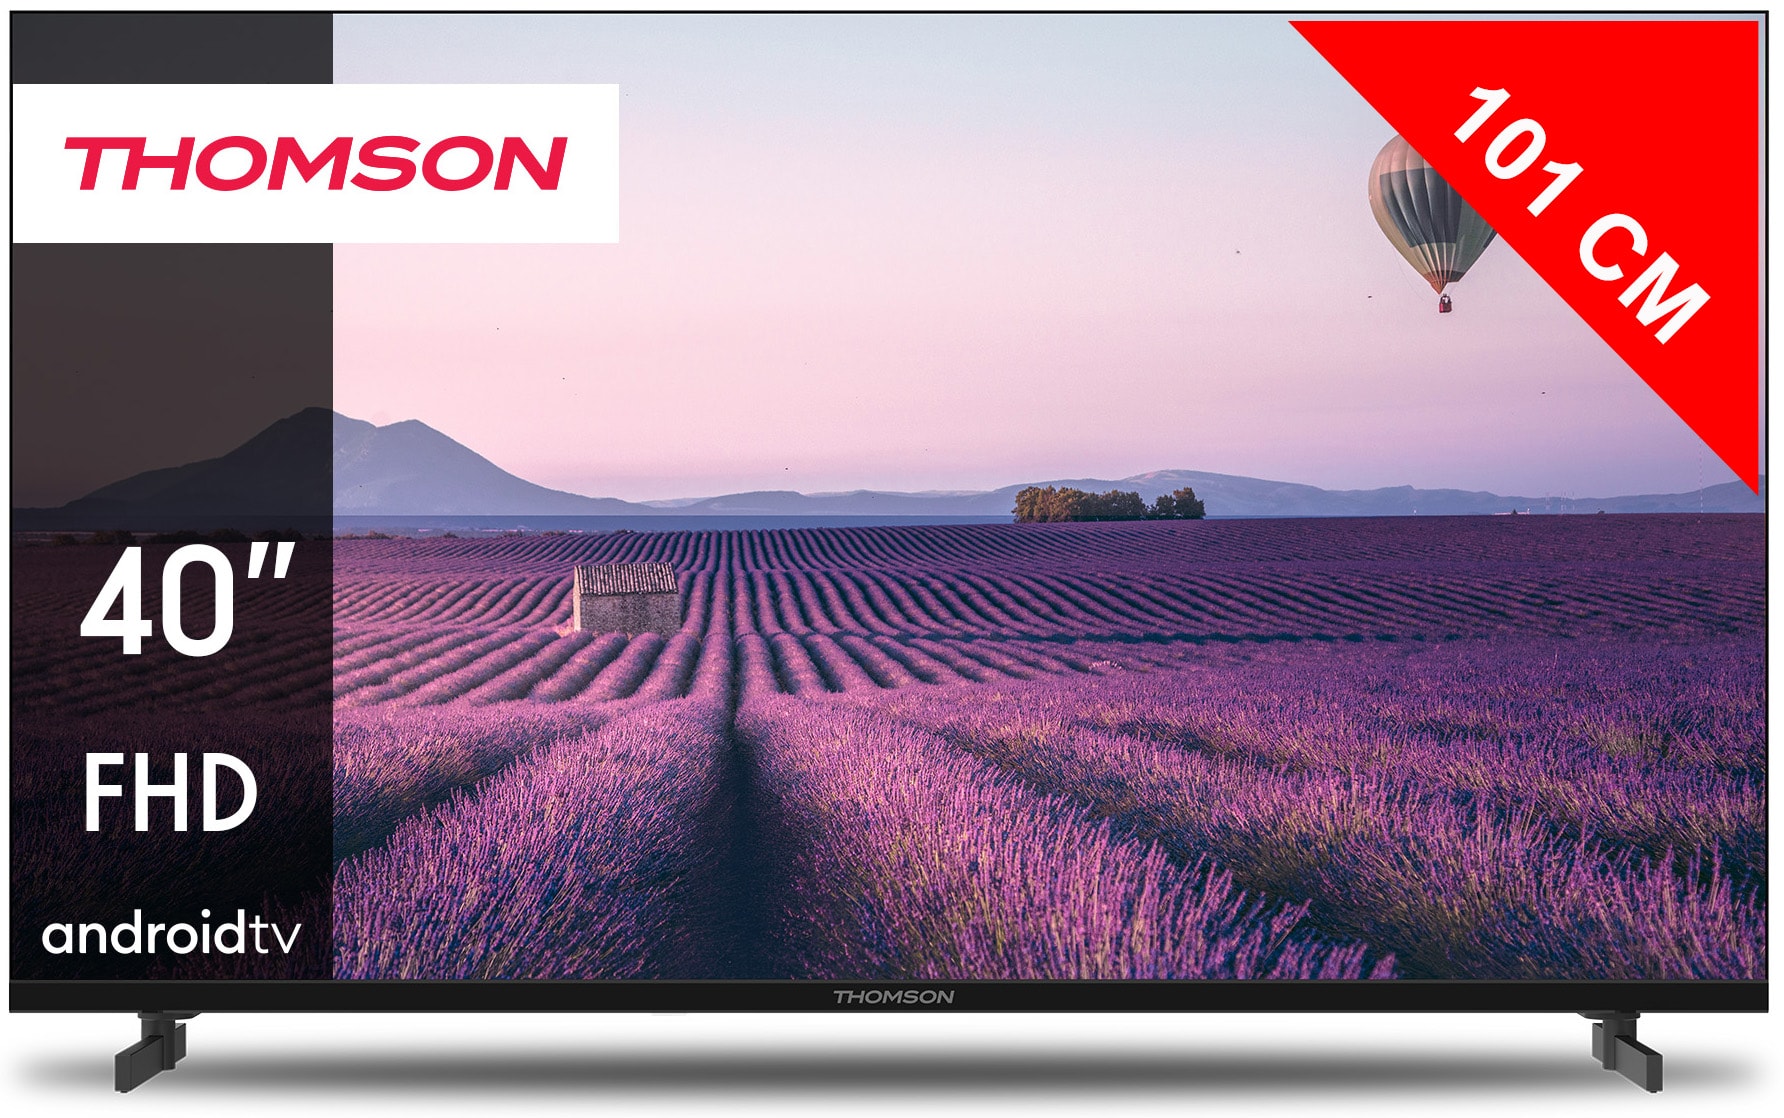 THOMSON TV LED Full HD 101 cm 60Hz Android TV 40"  40FA2S13